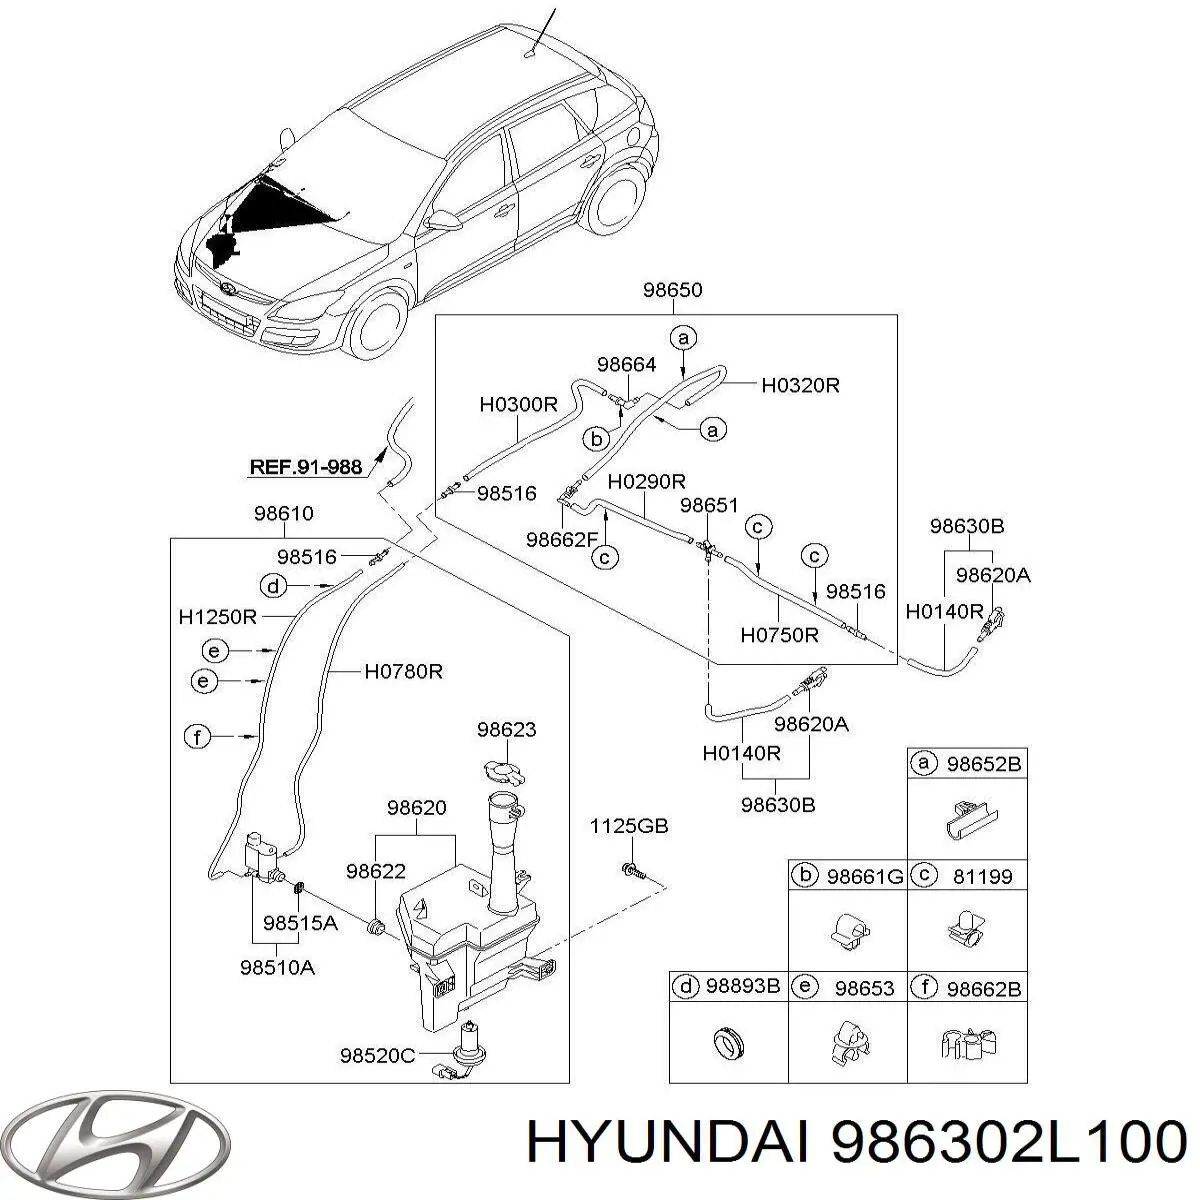 986302L100 Hyundai/Kia tobera de agua regadora, lavado de parabrisas